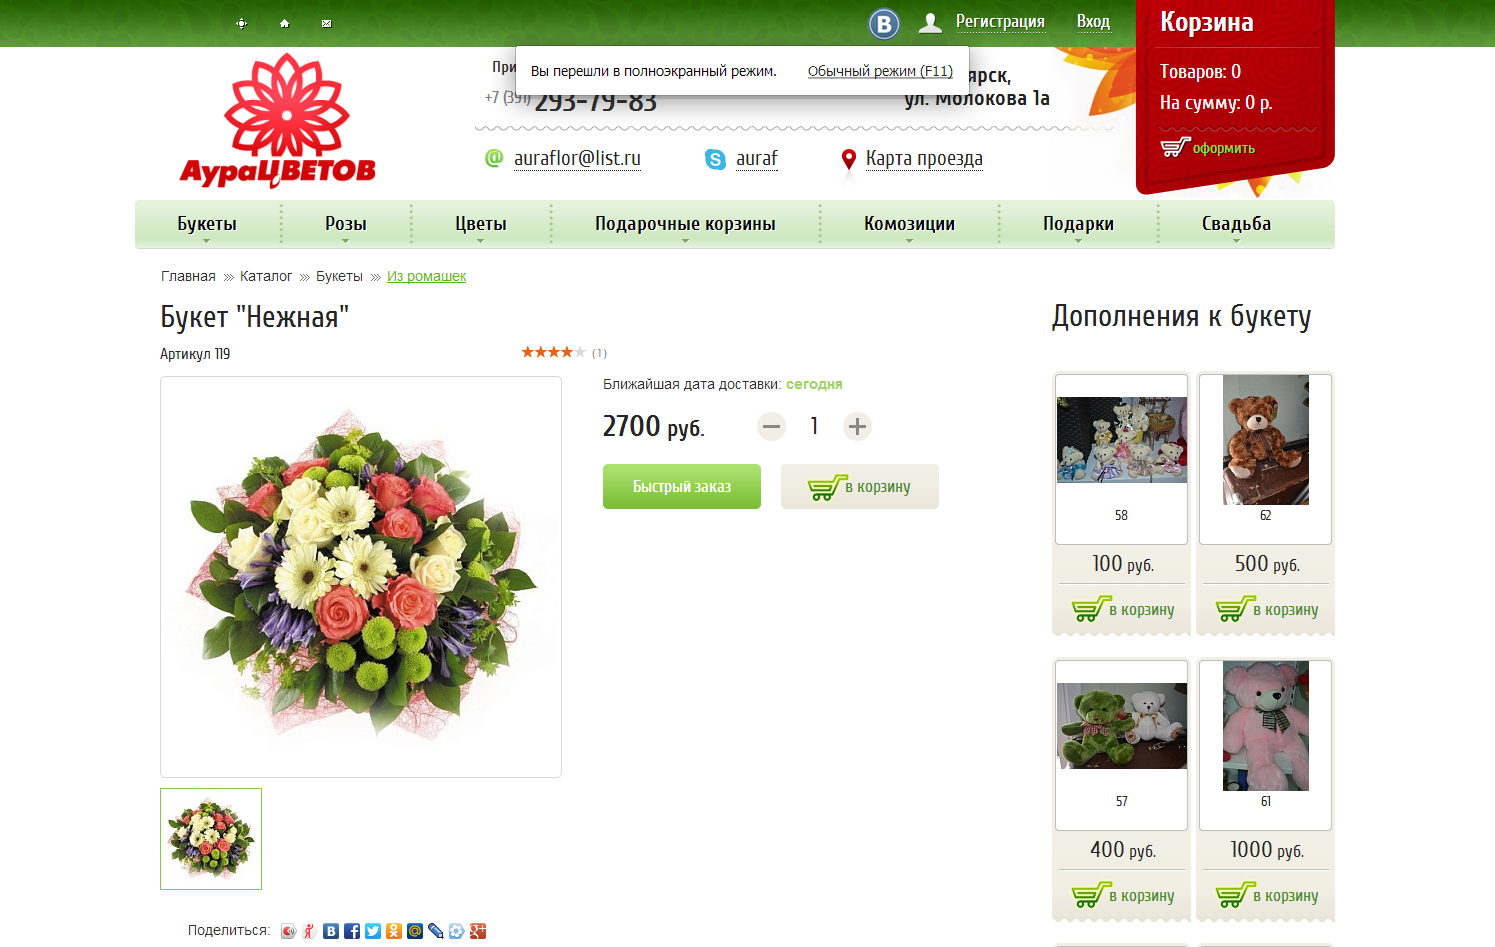 аурацветов - интернет магазин цветов